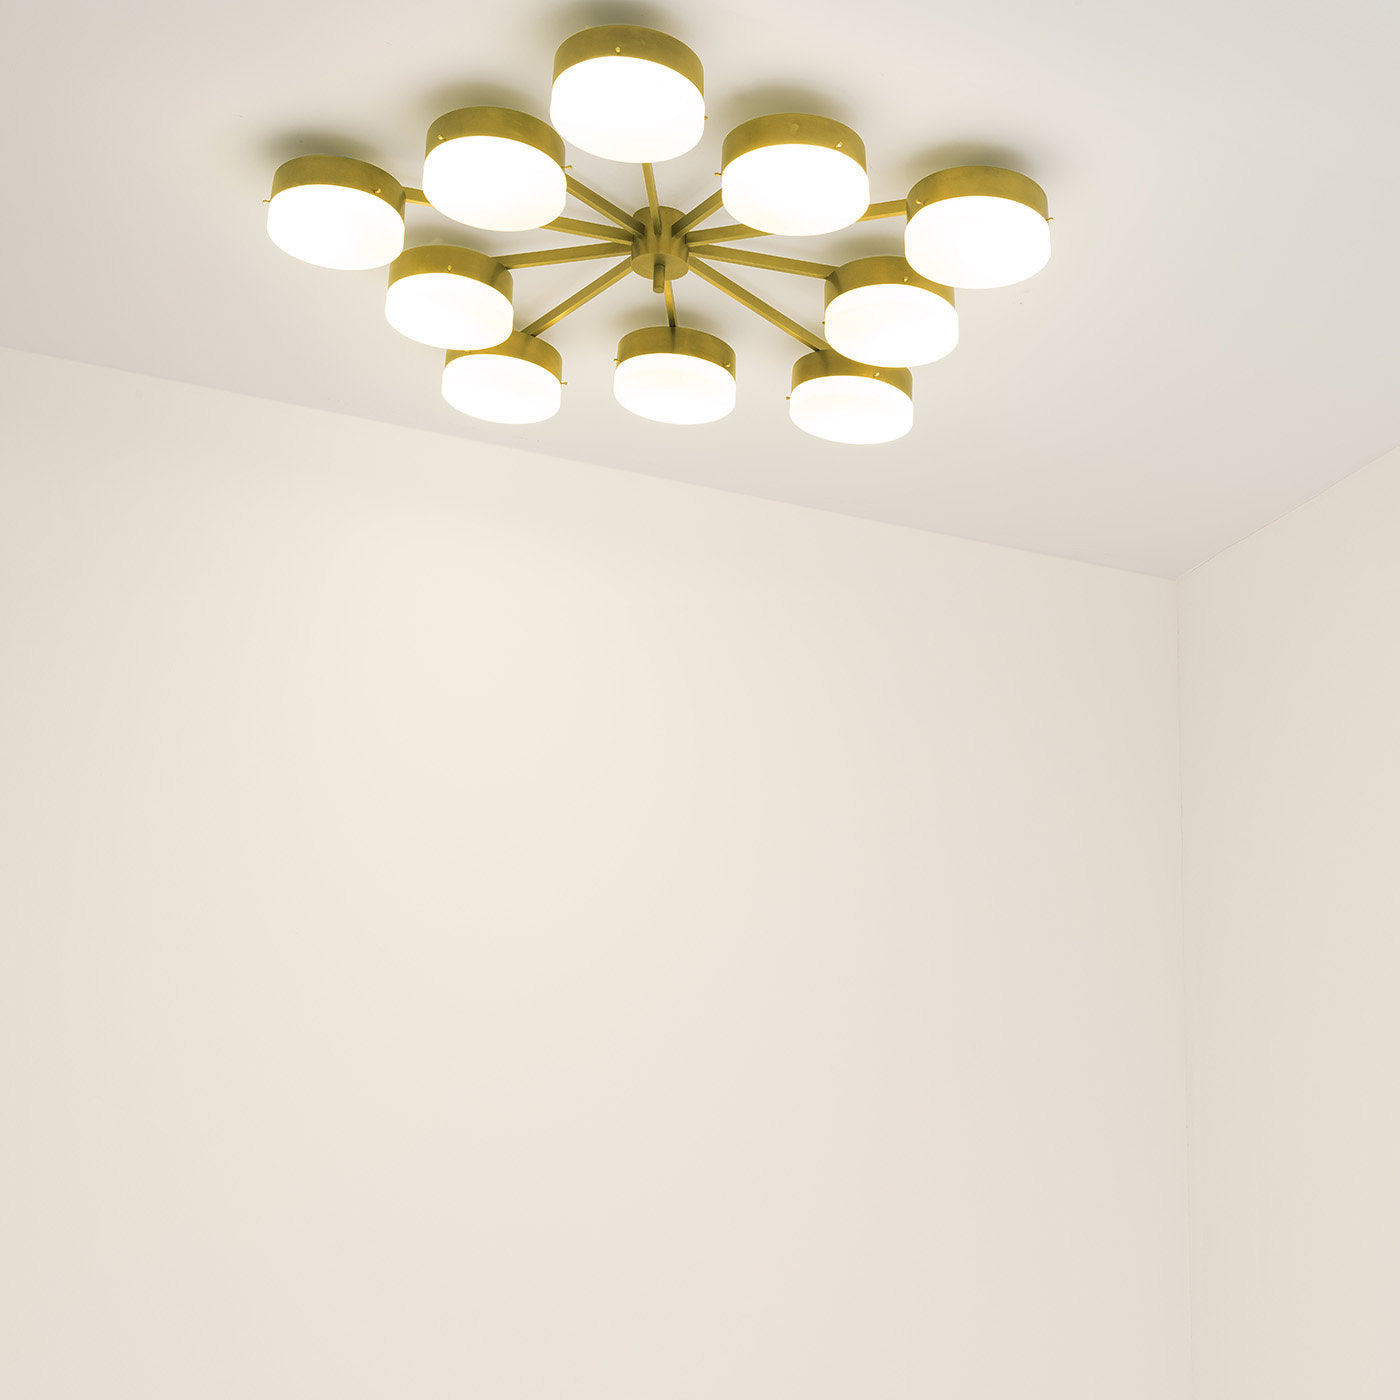 Celeste Epoch Ceiling/Wall Light - Alternative view 1